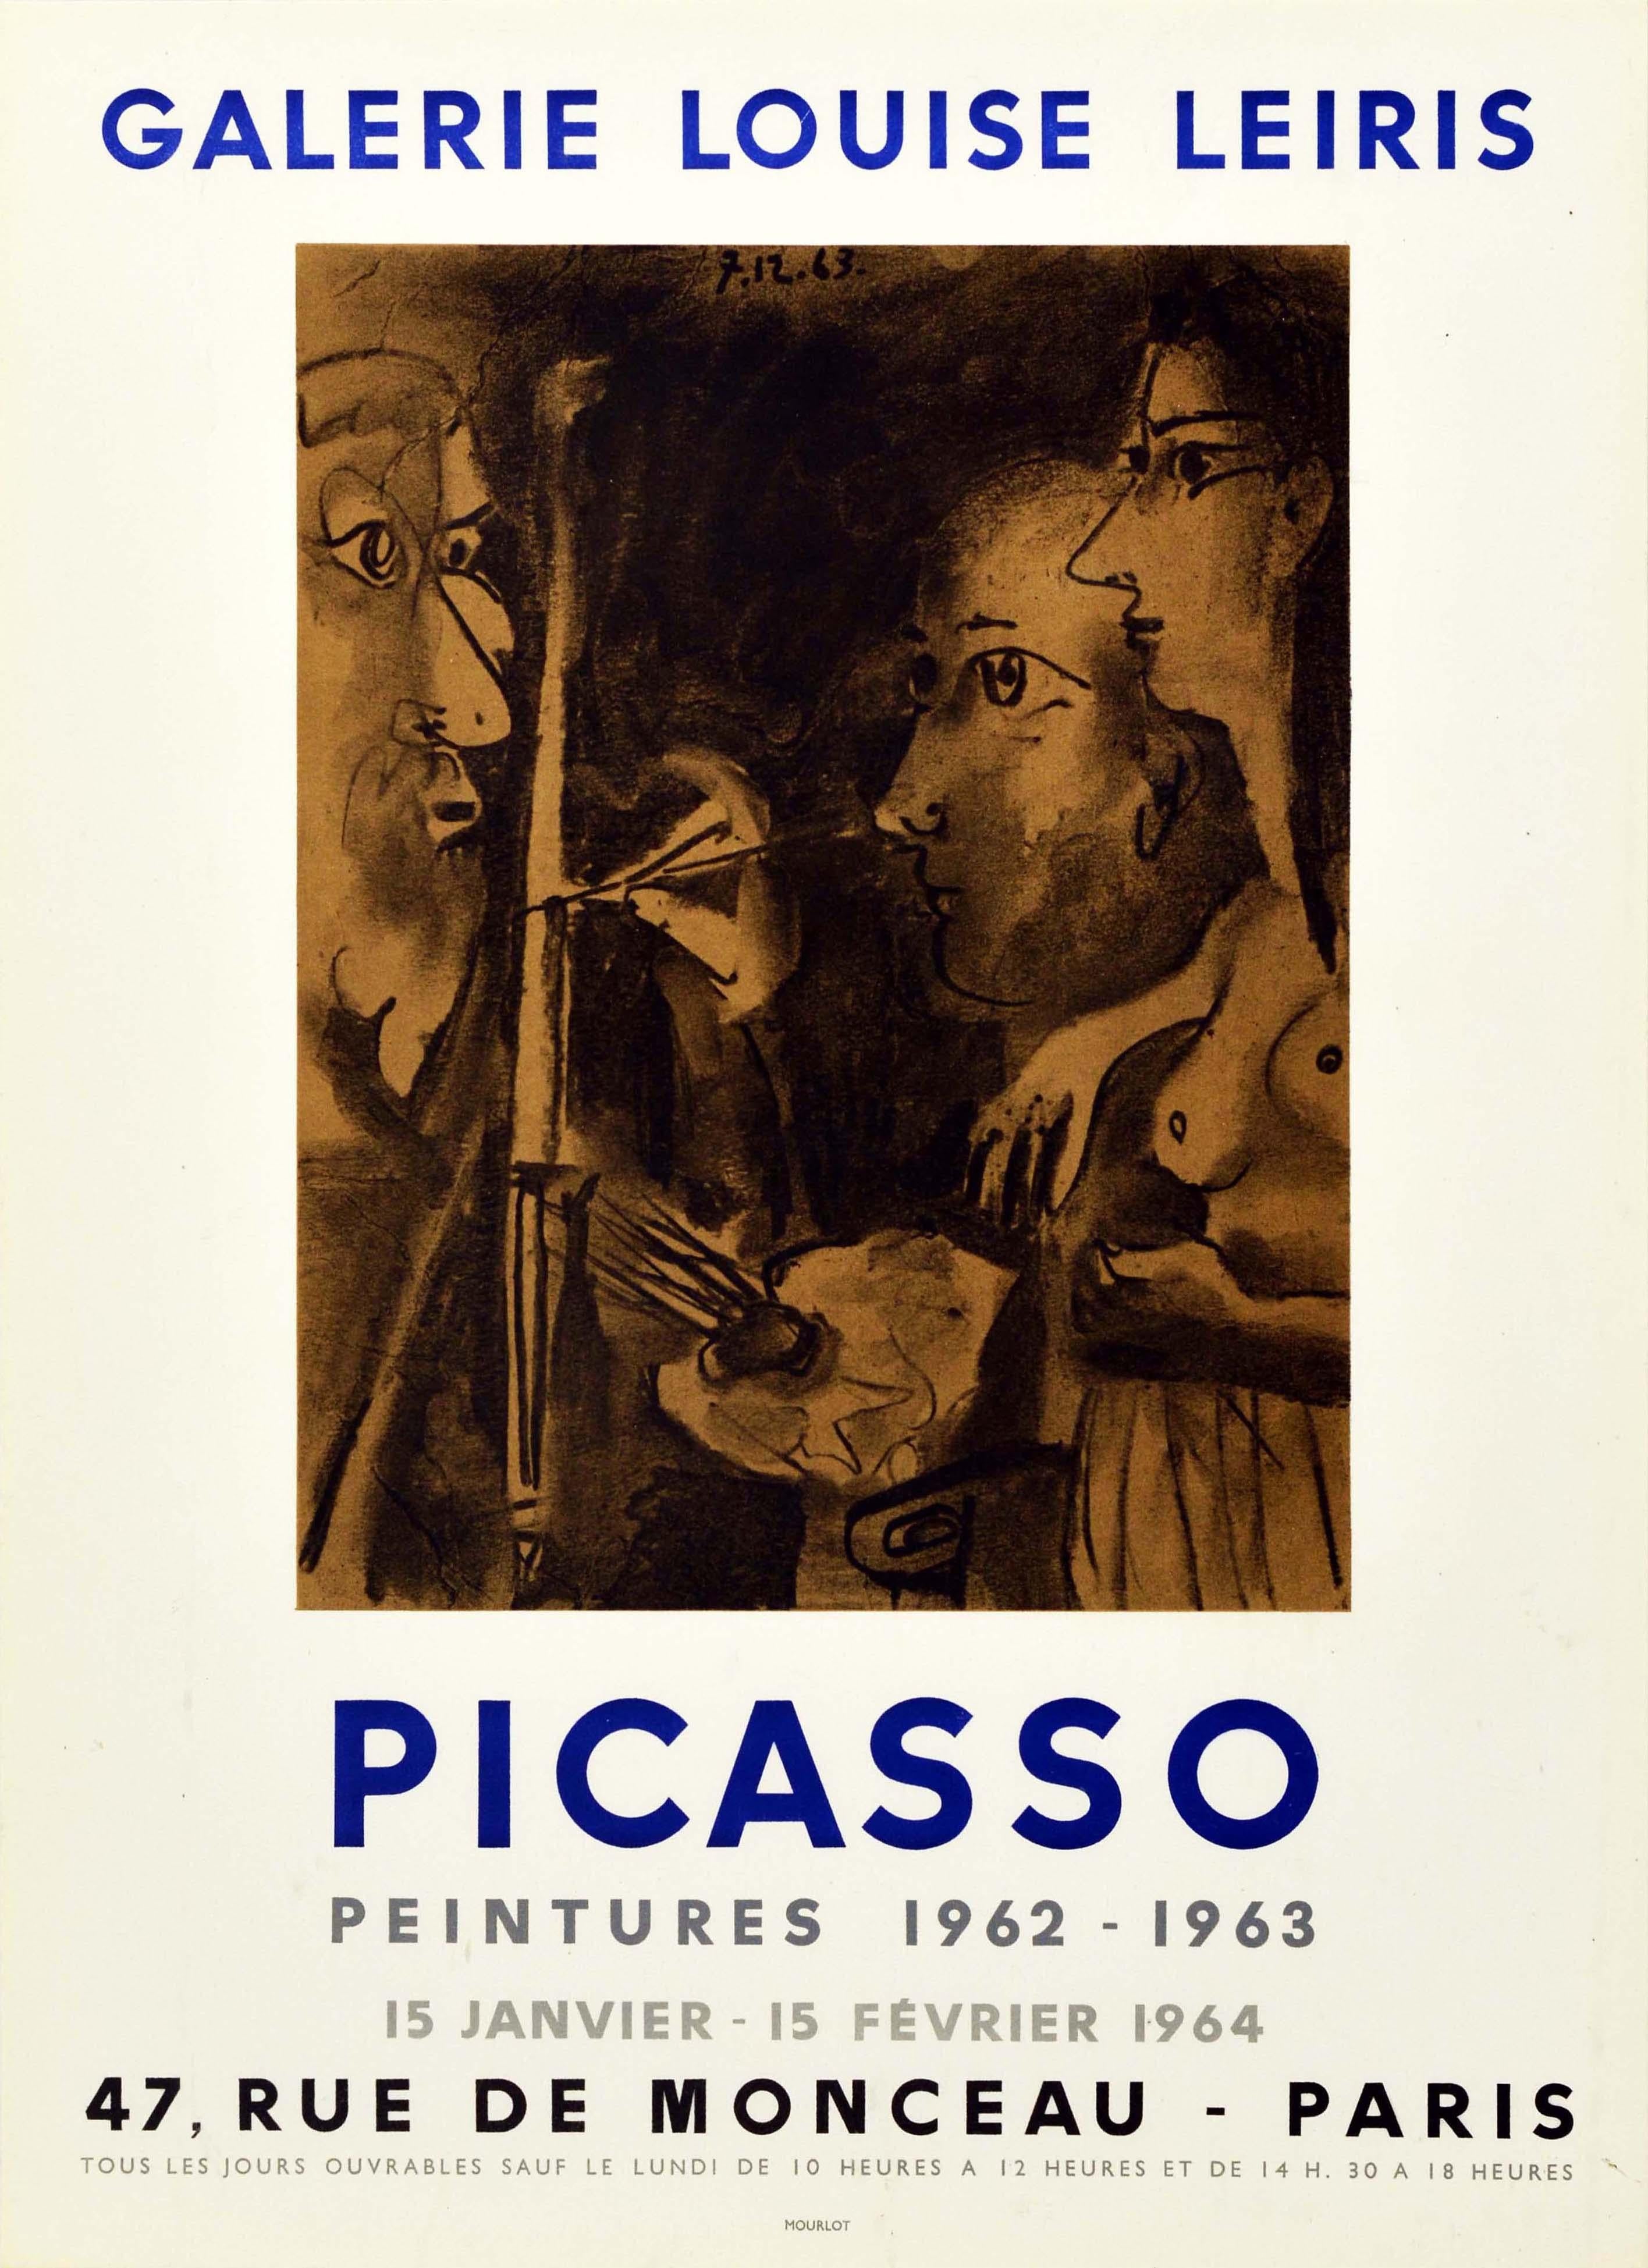 (after) Pablo Picasso Print - Original Vintage Paris Art Exhibition Poster Picasso The Painter And His Model